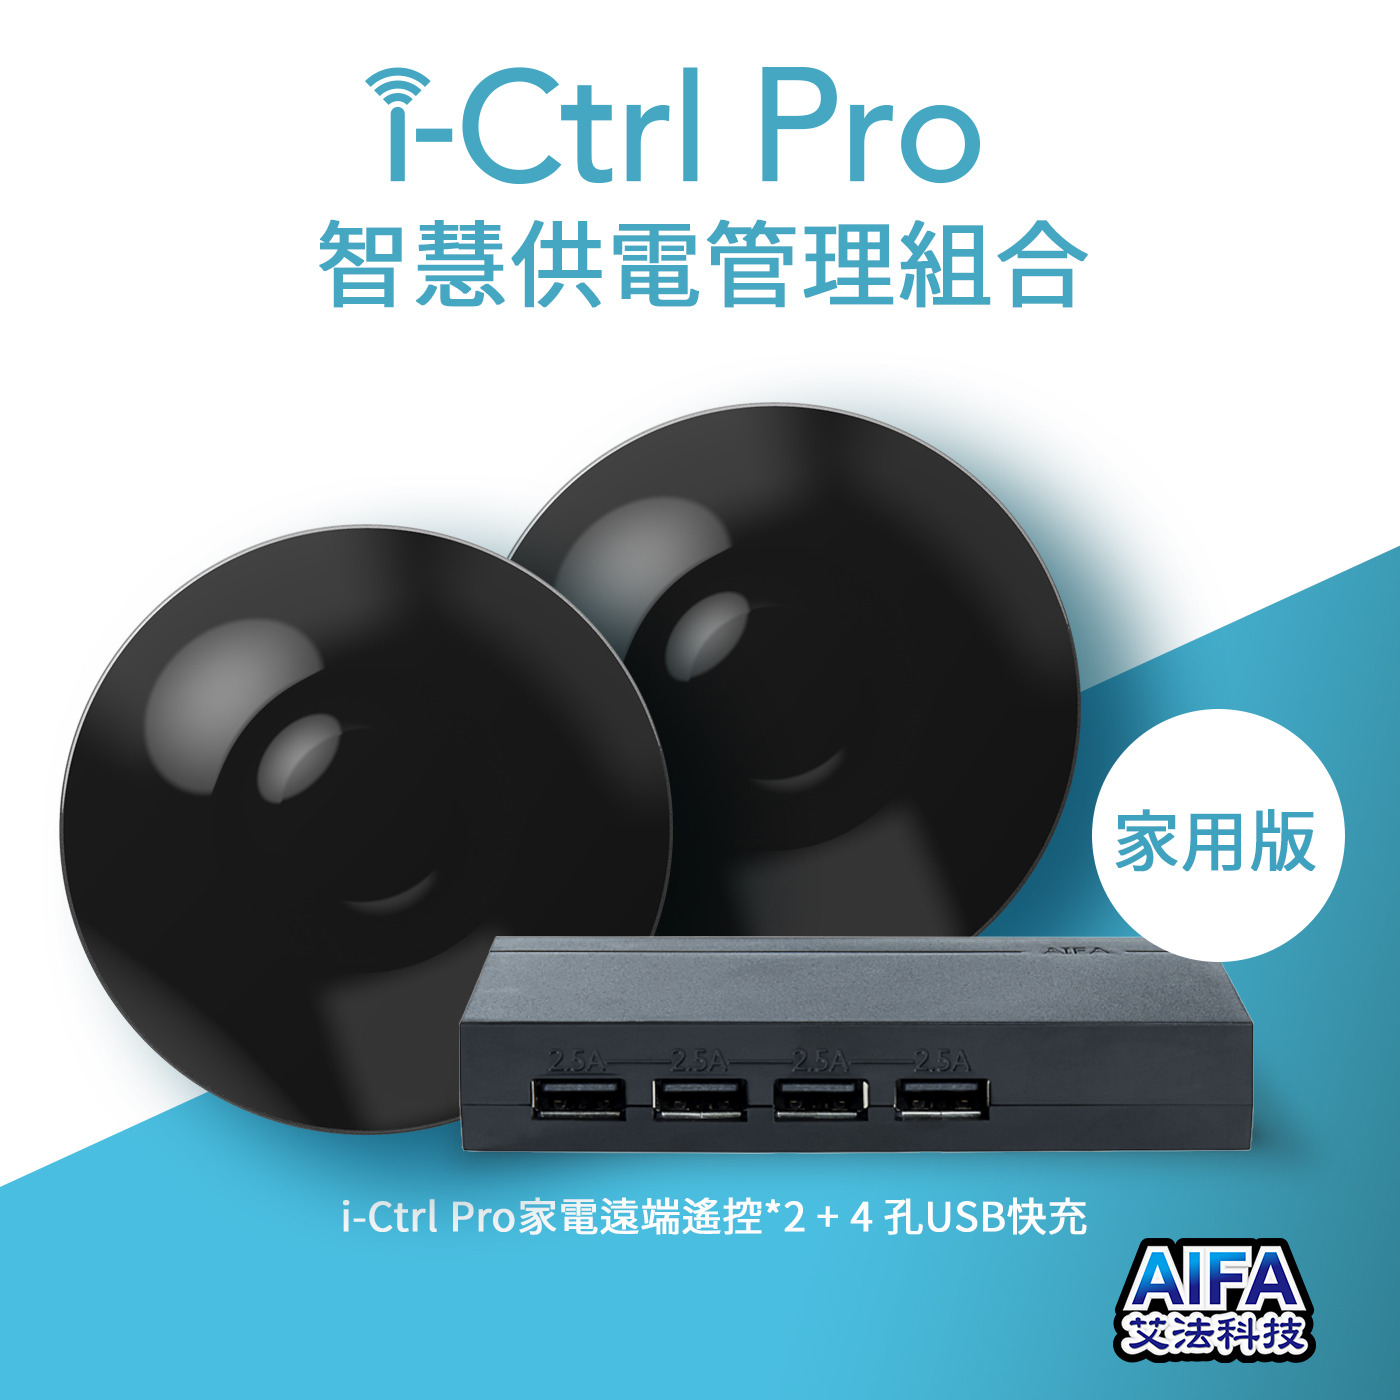 i-Ctrl Pro smart remote smart home 智慧供電管理組合aifa艾法科技